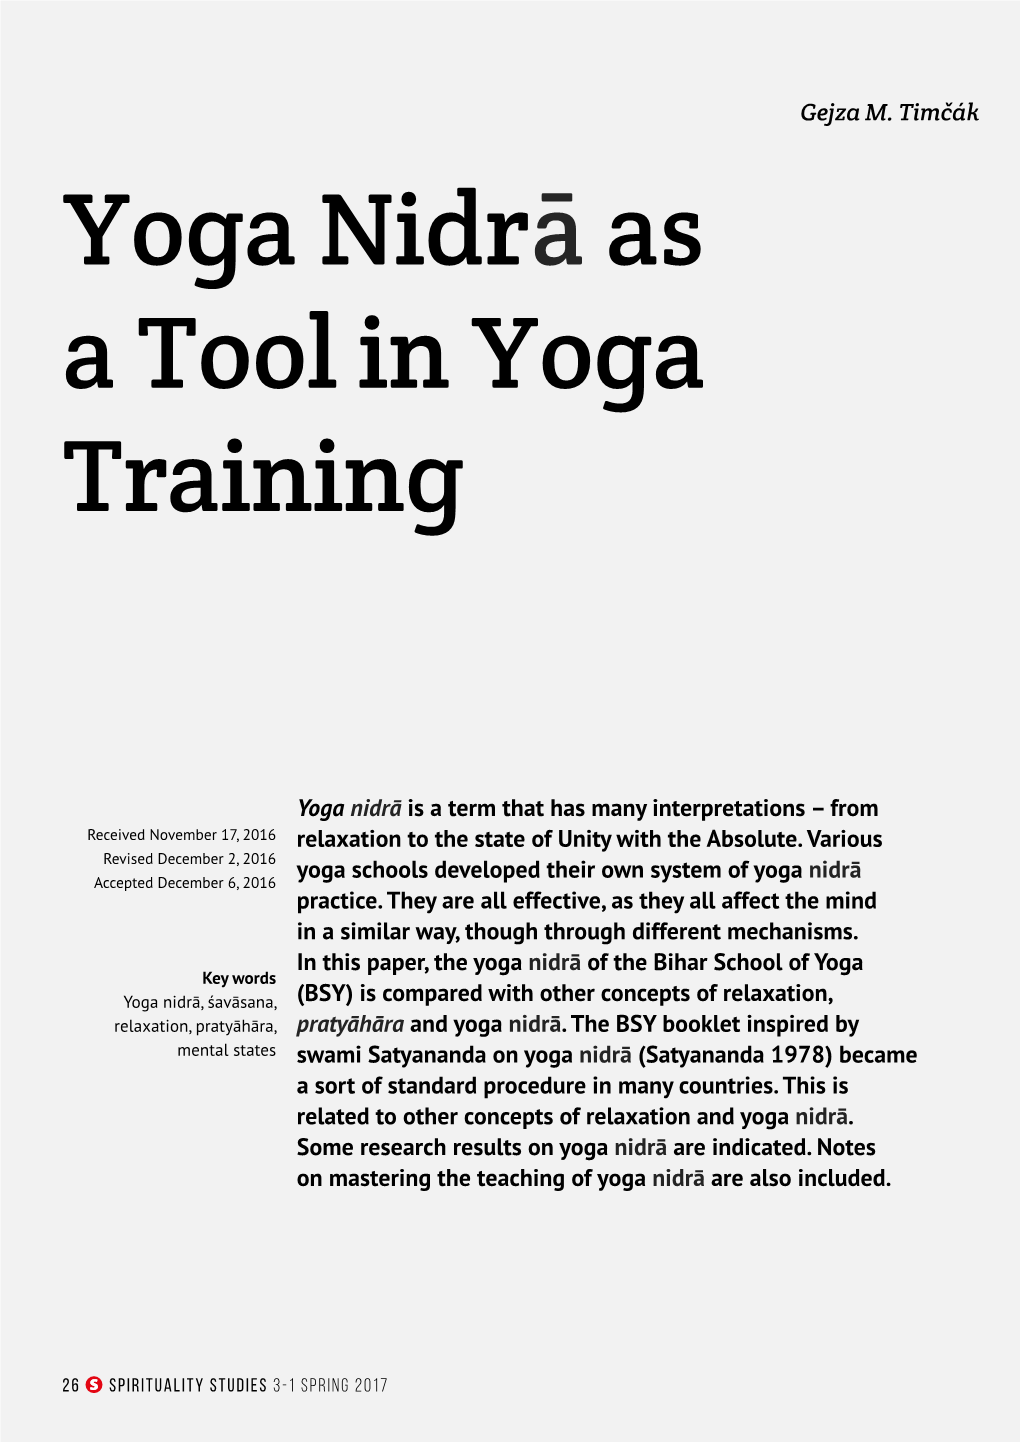 Yoga Nidrā As a Tool in Yoga Training